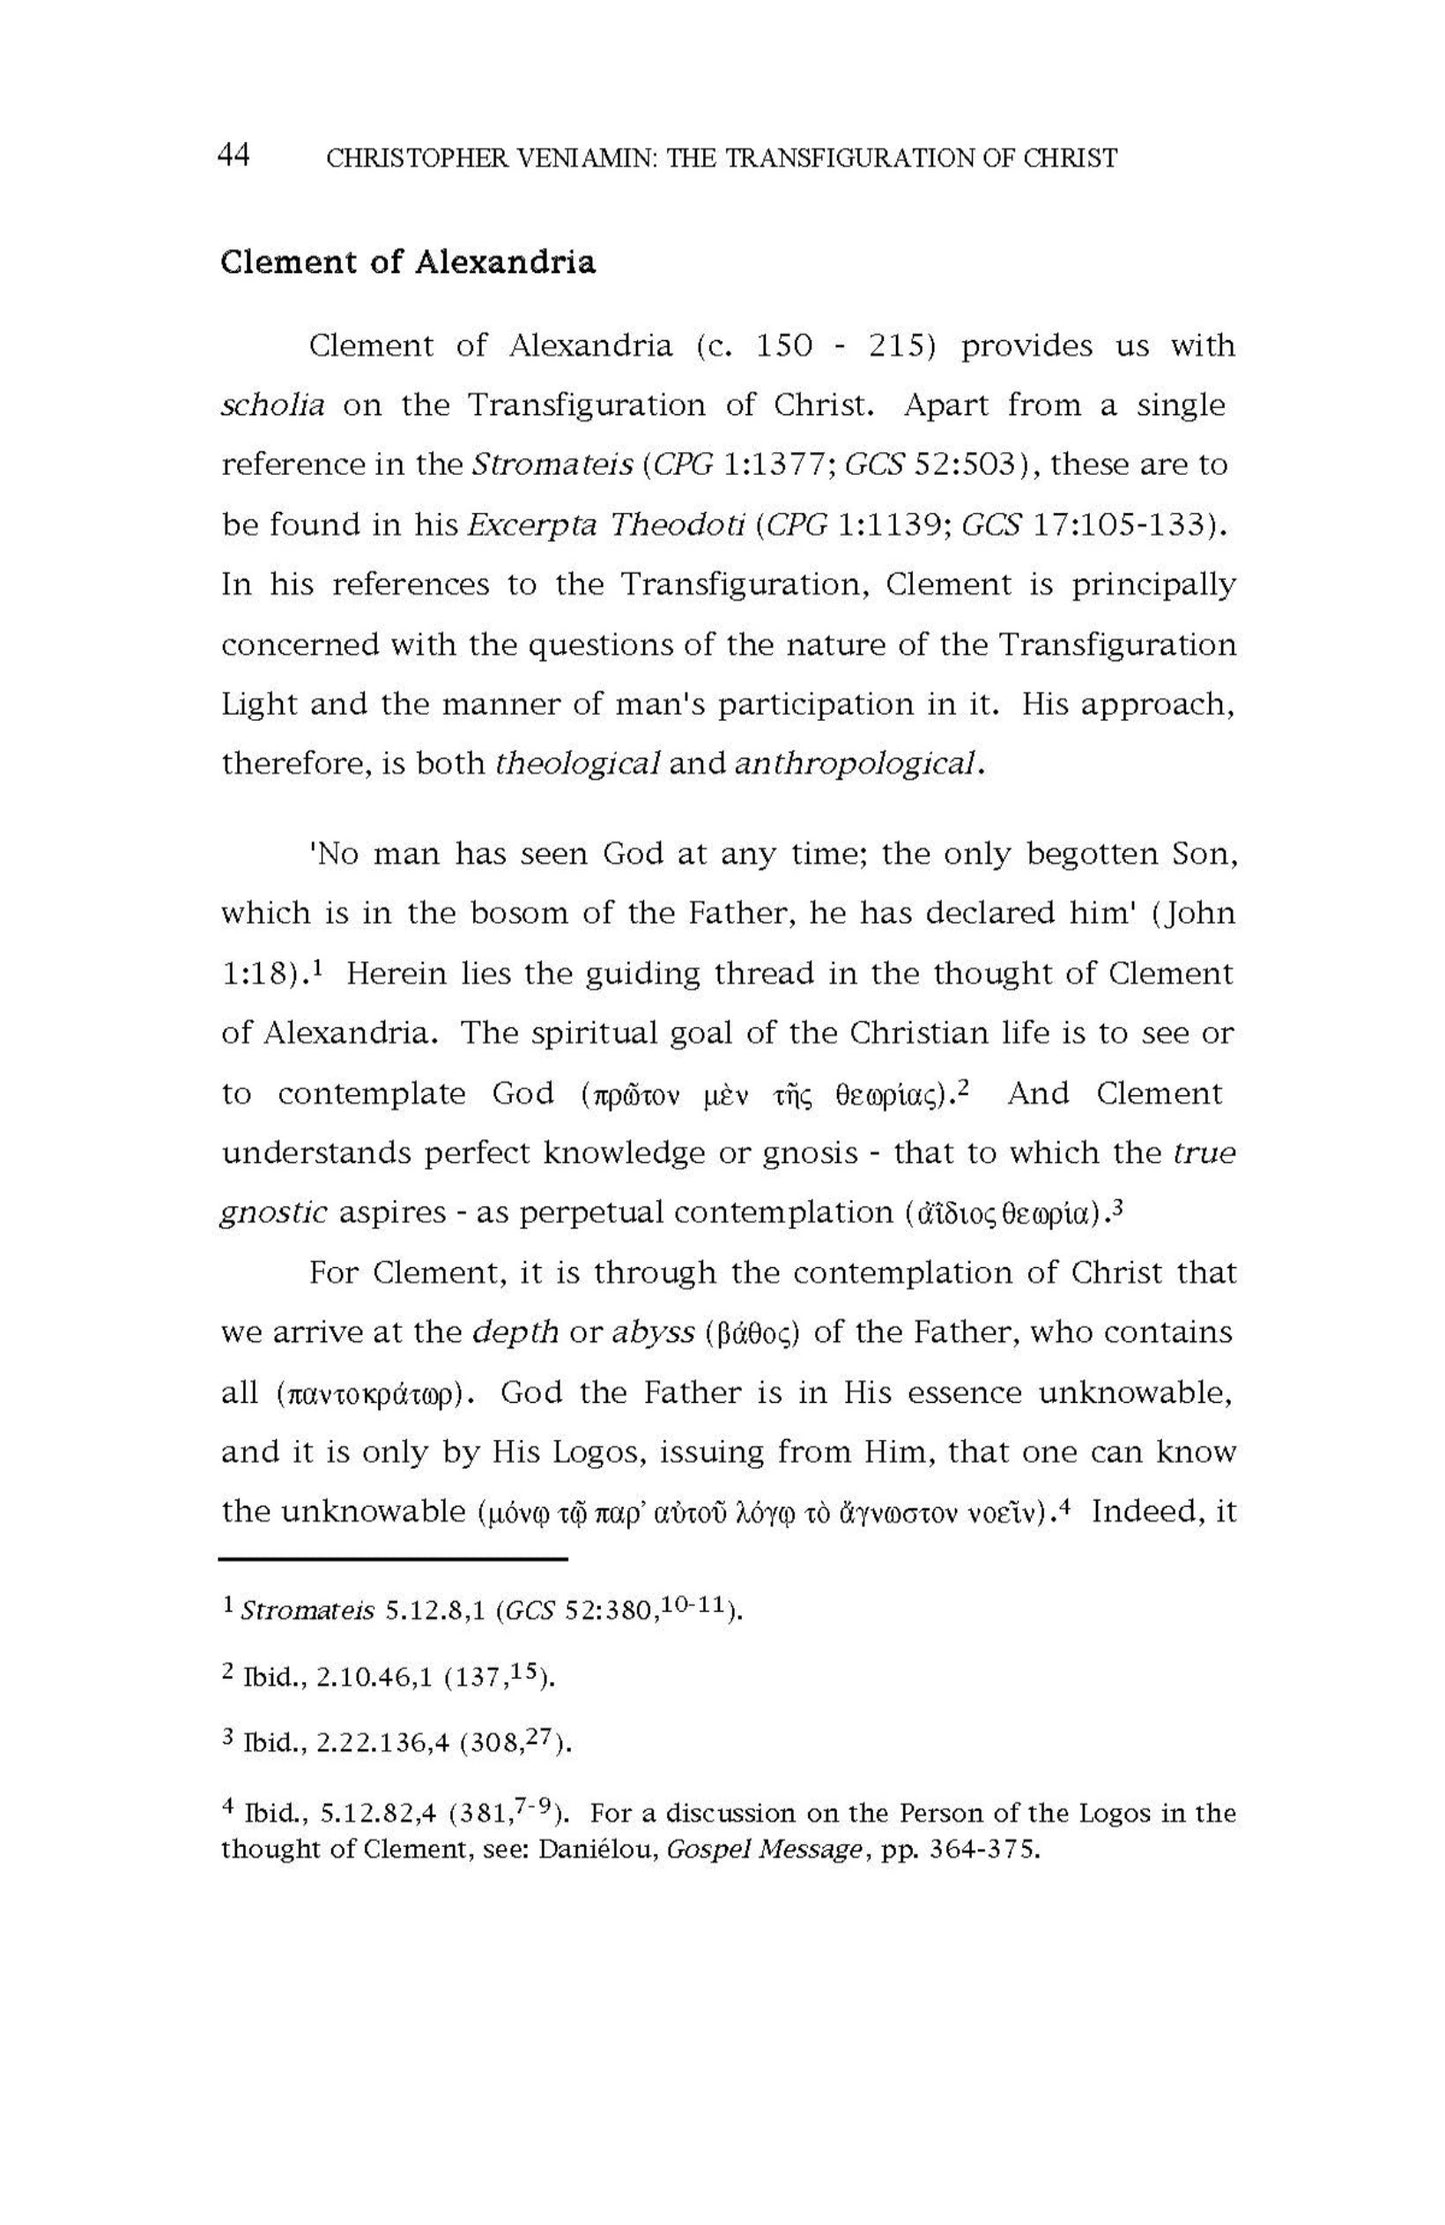 The Transfiguration of Christ in Greek Patristic Literature, by C. Veniamin